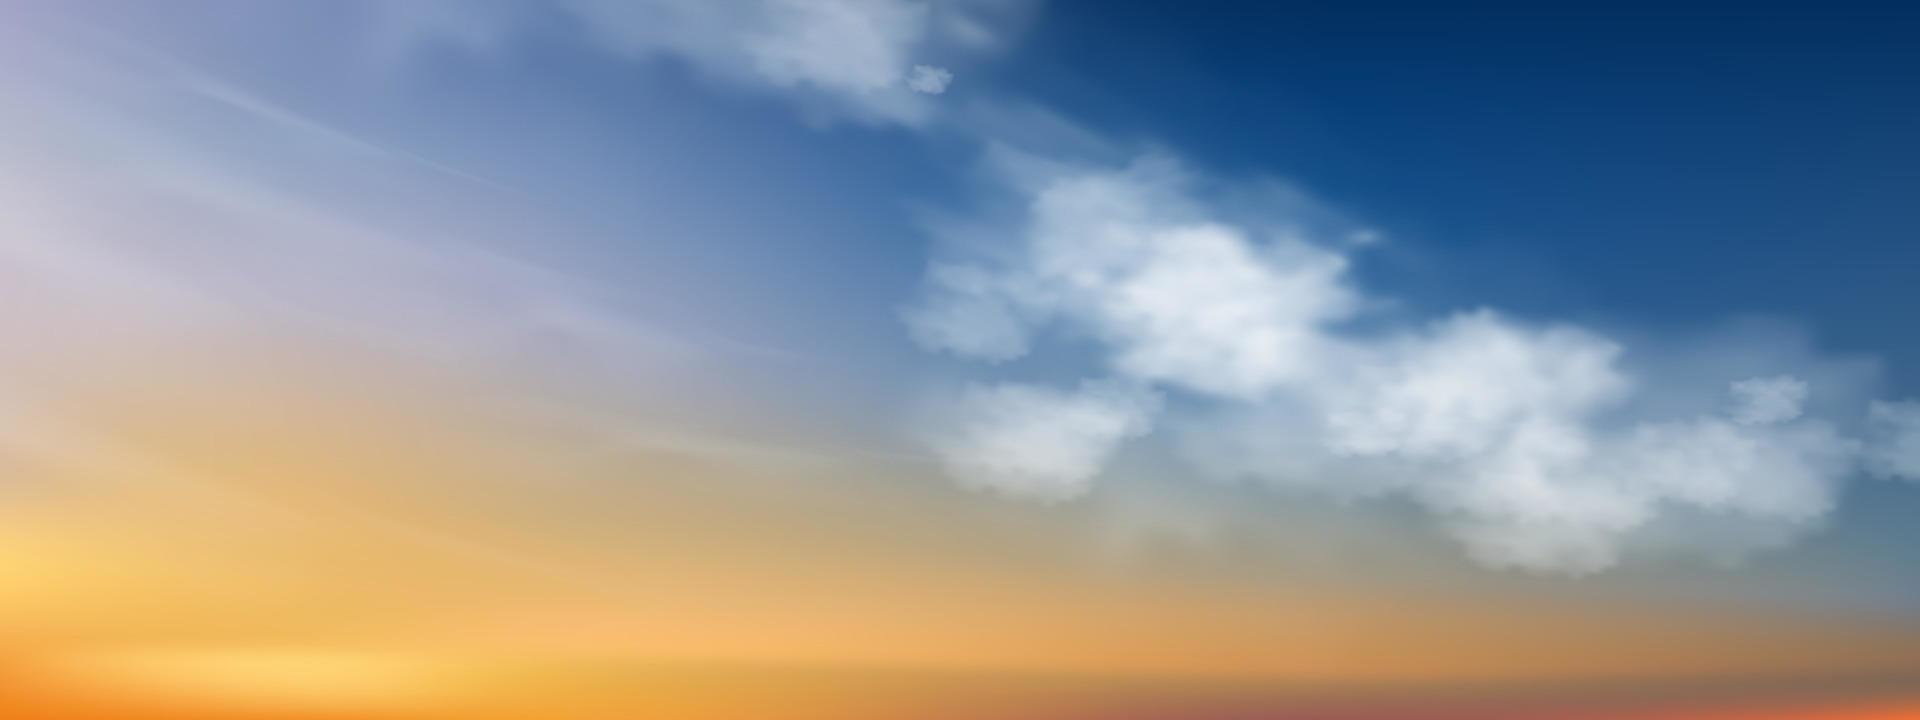 Sonnenuntergang Himmel, Horizont Frühling Himmel scape im Blau, Gelb Farbe, Vektor Illustration von Natur Wolke, Himmel im sonnig Tag Frühling, Sommer, Horizont malerisch Banner Hintergrund zum Welt Umgebung Tag, Erde Tag